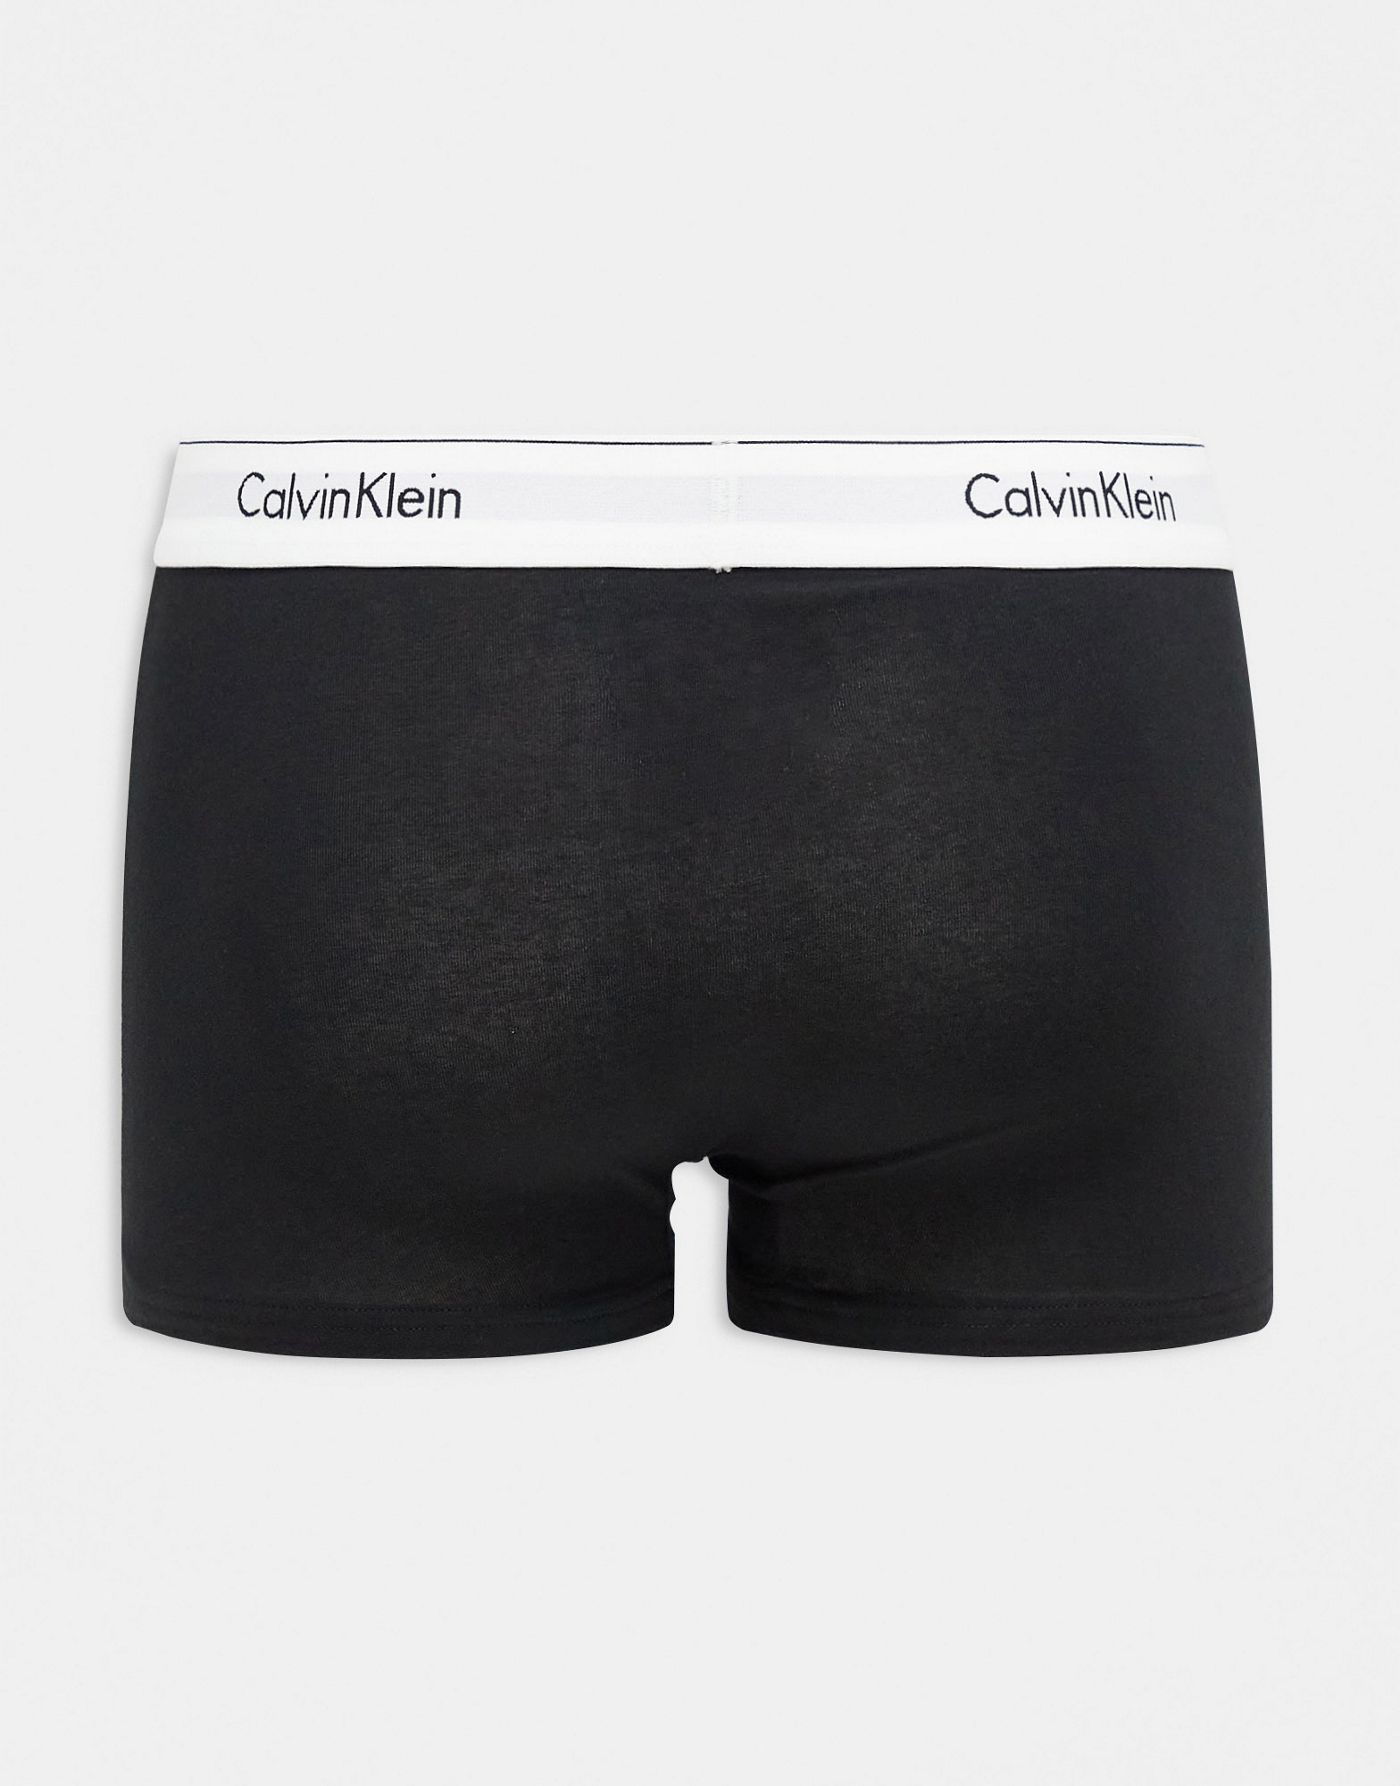 Calvin Klein 3 pack cotton stretch trunks in  multi